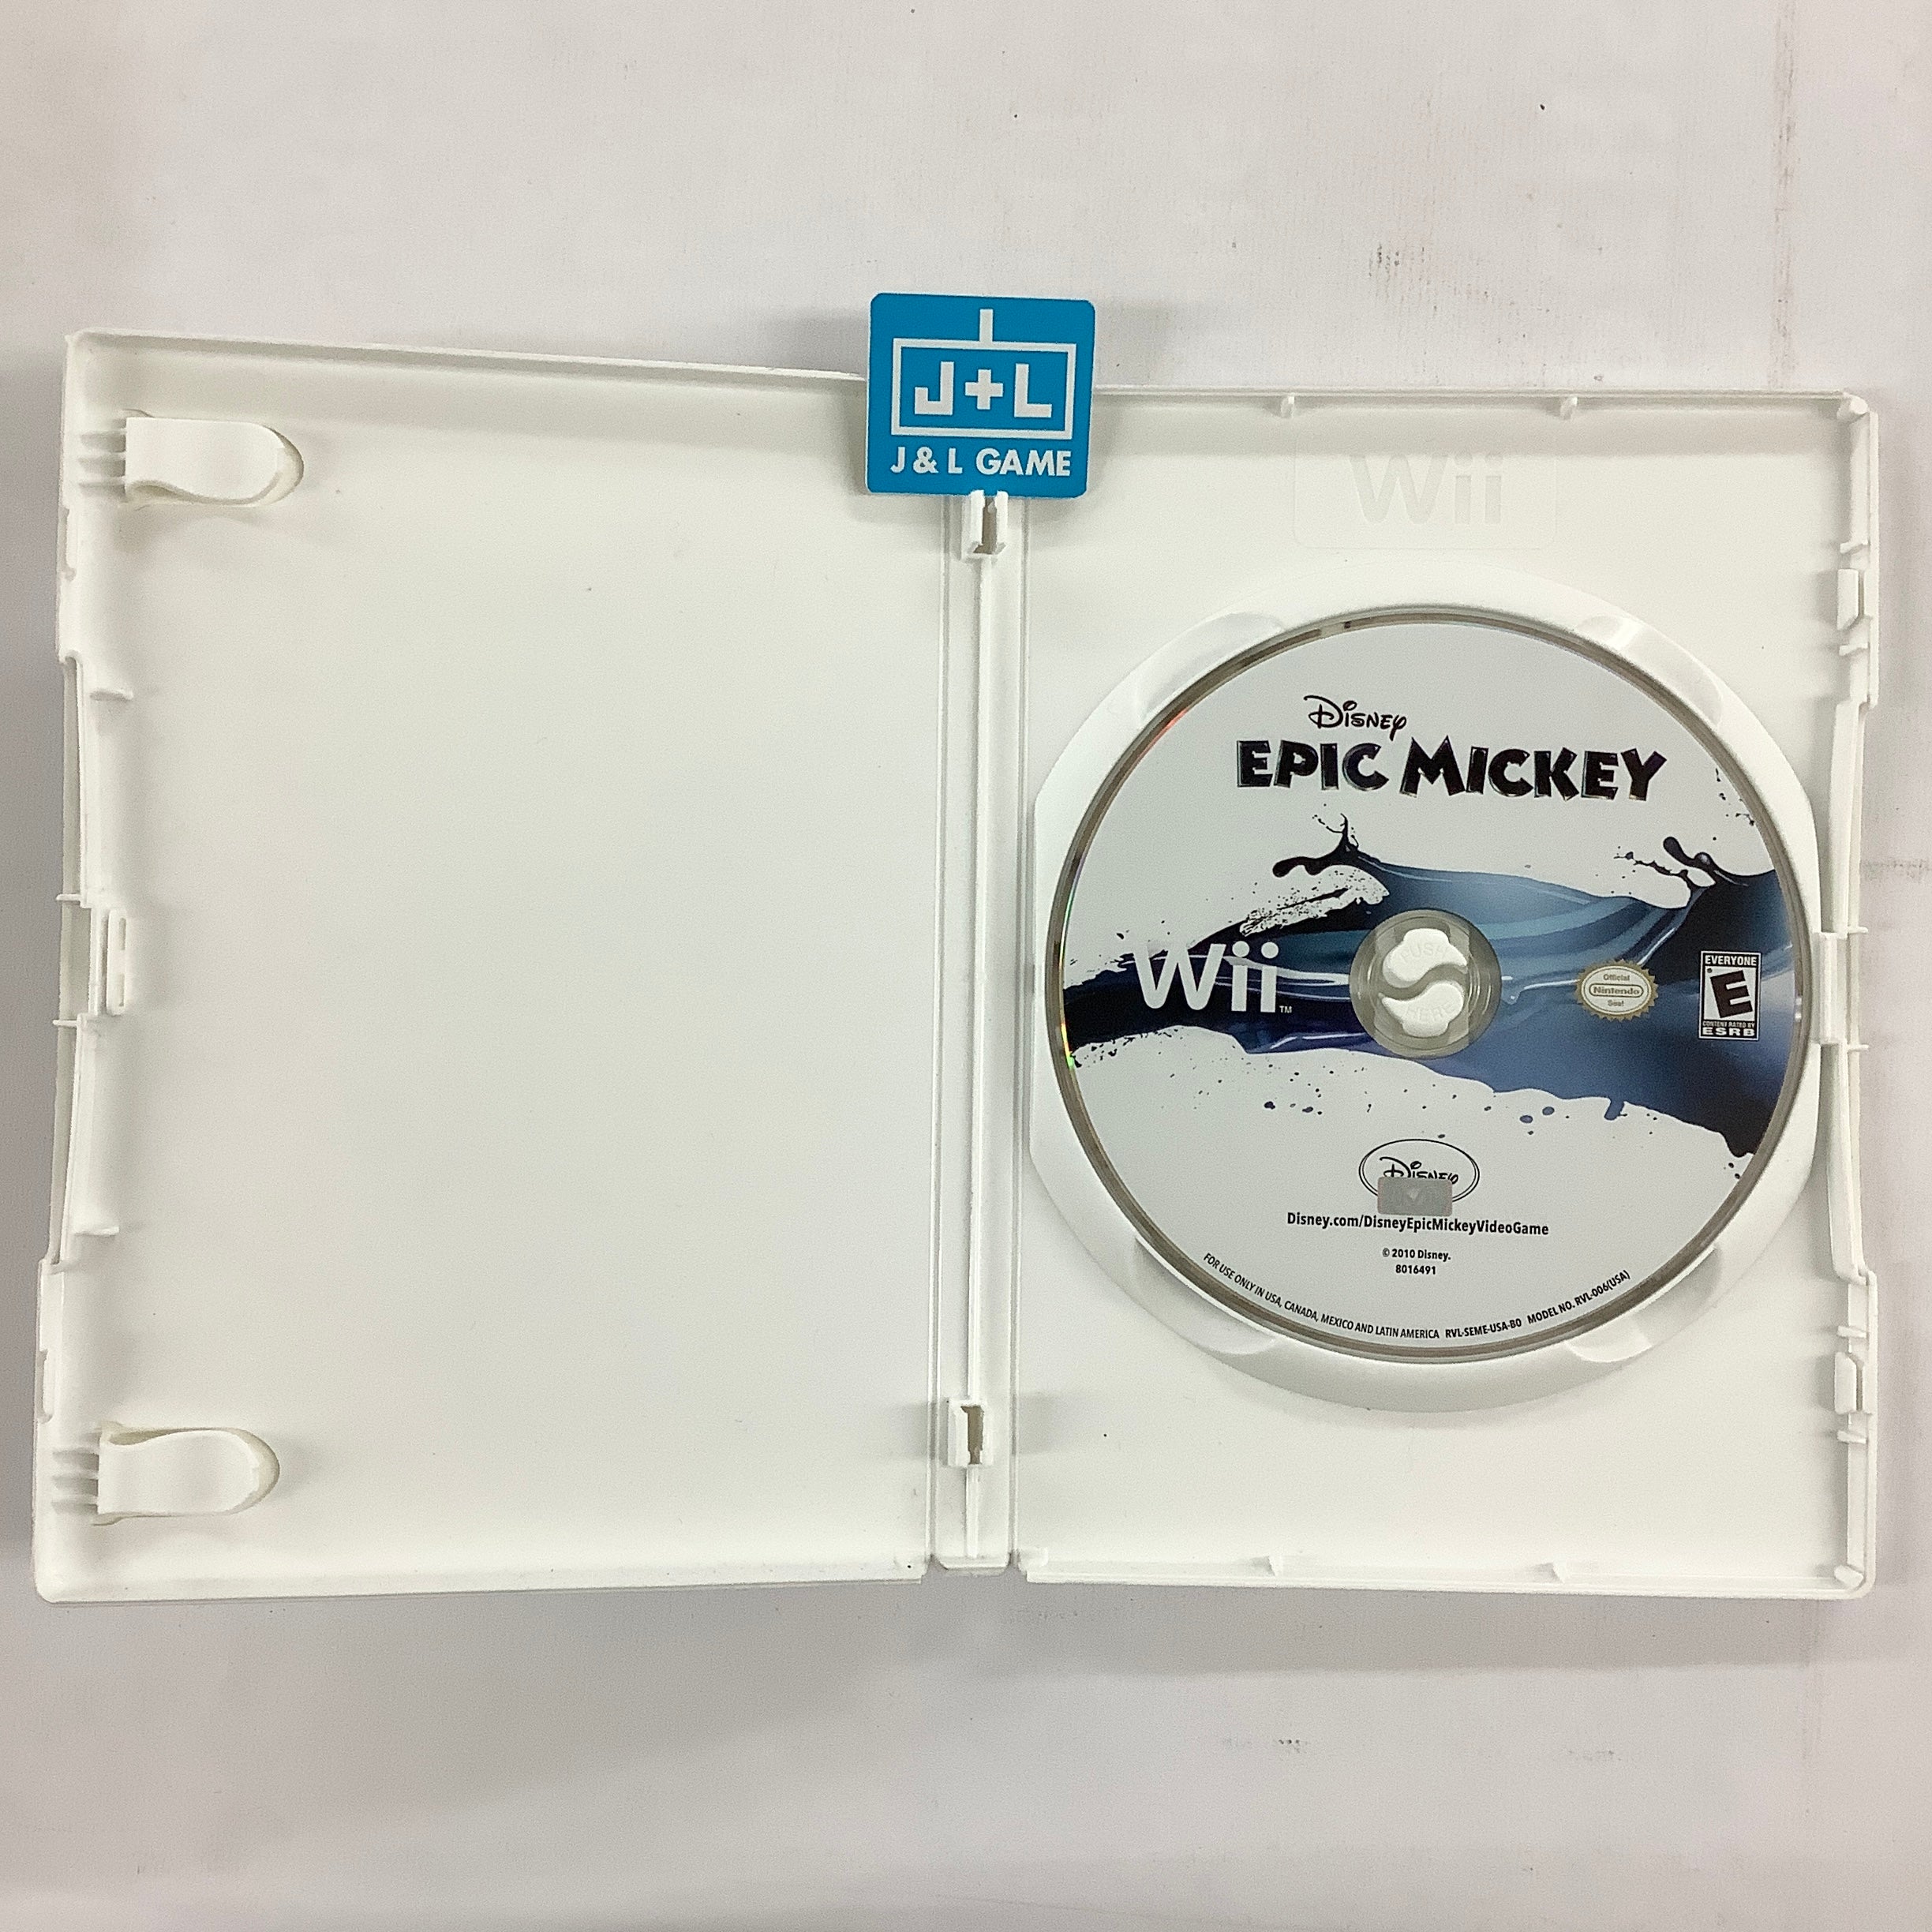 Disney Epic Mickey - Nintendo Wii [Pre-Owned] Video Games Disney Interactive Studios   